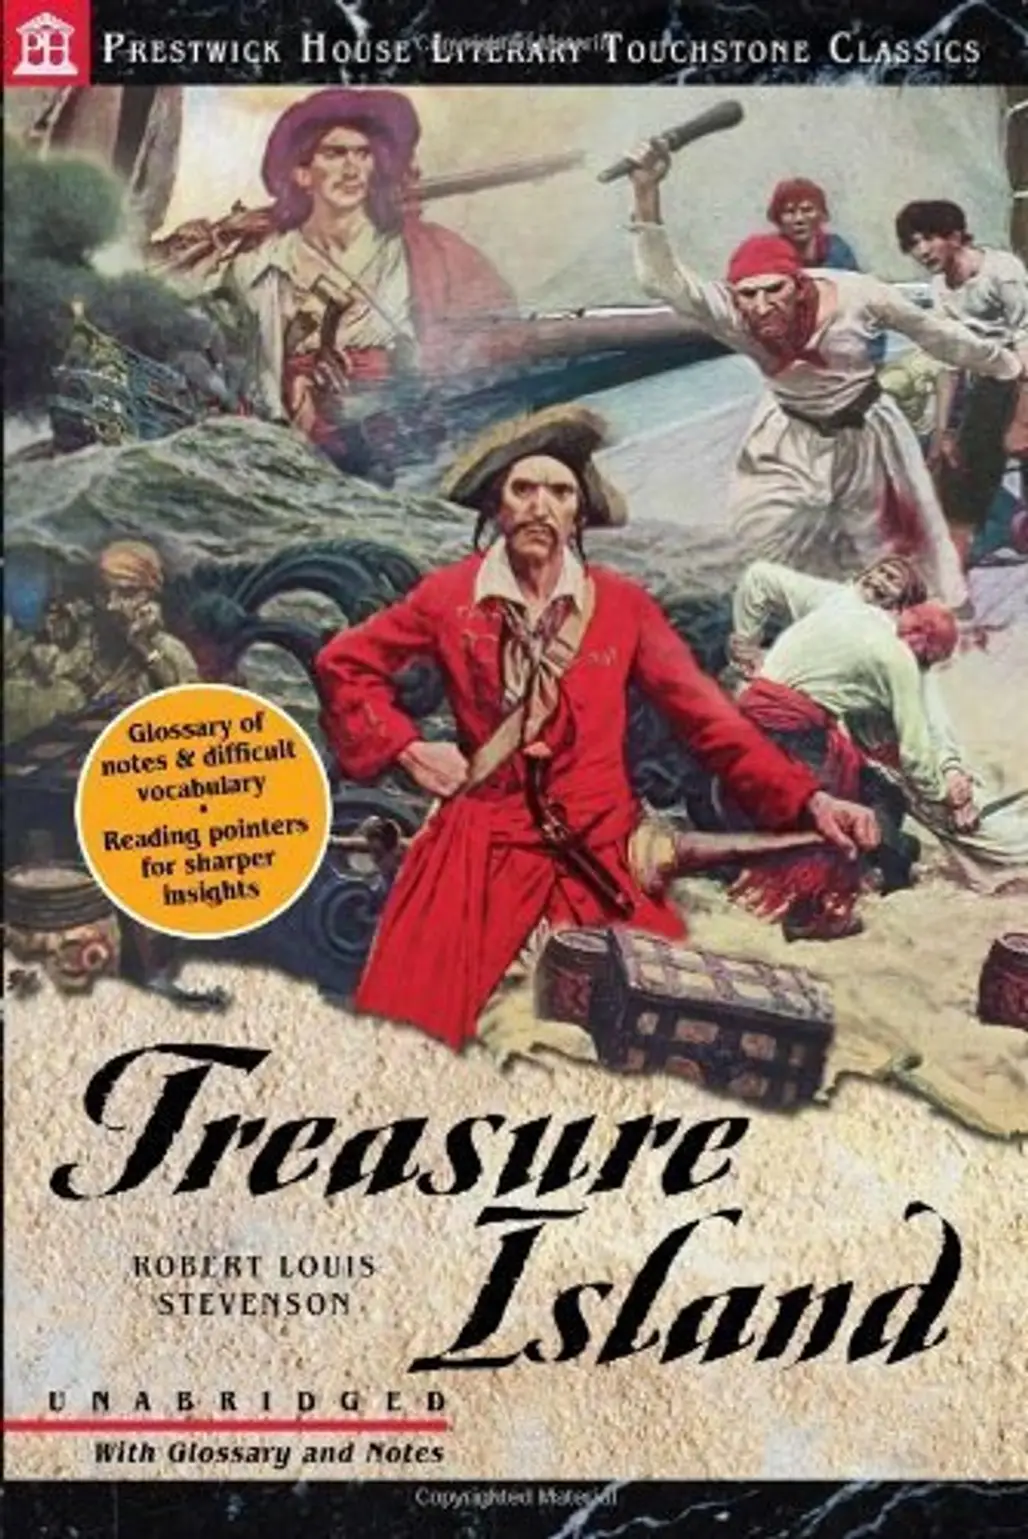 'Treasure Island' by Robert Louis Stevenson